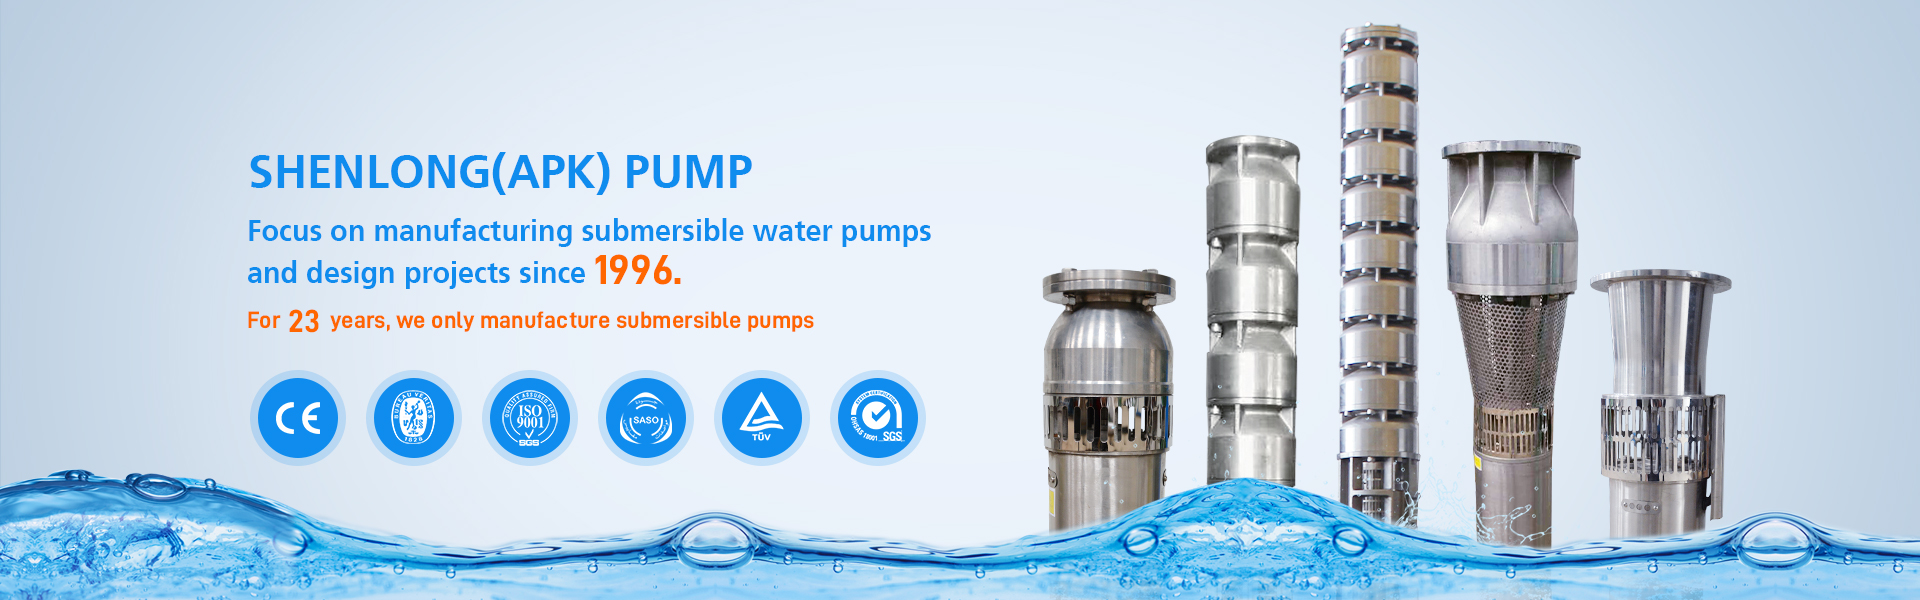 stainless steel seawater submerisble pump